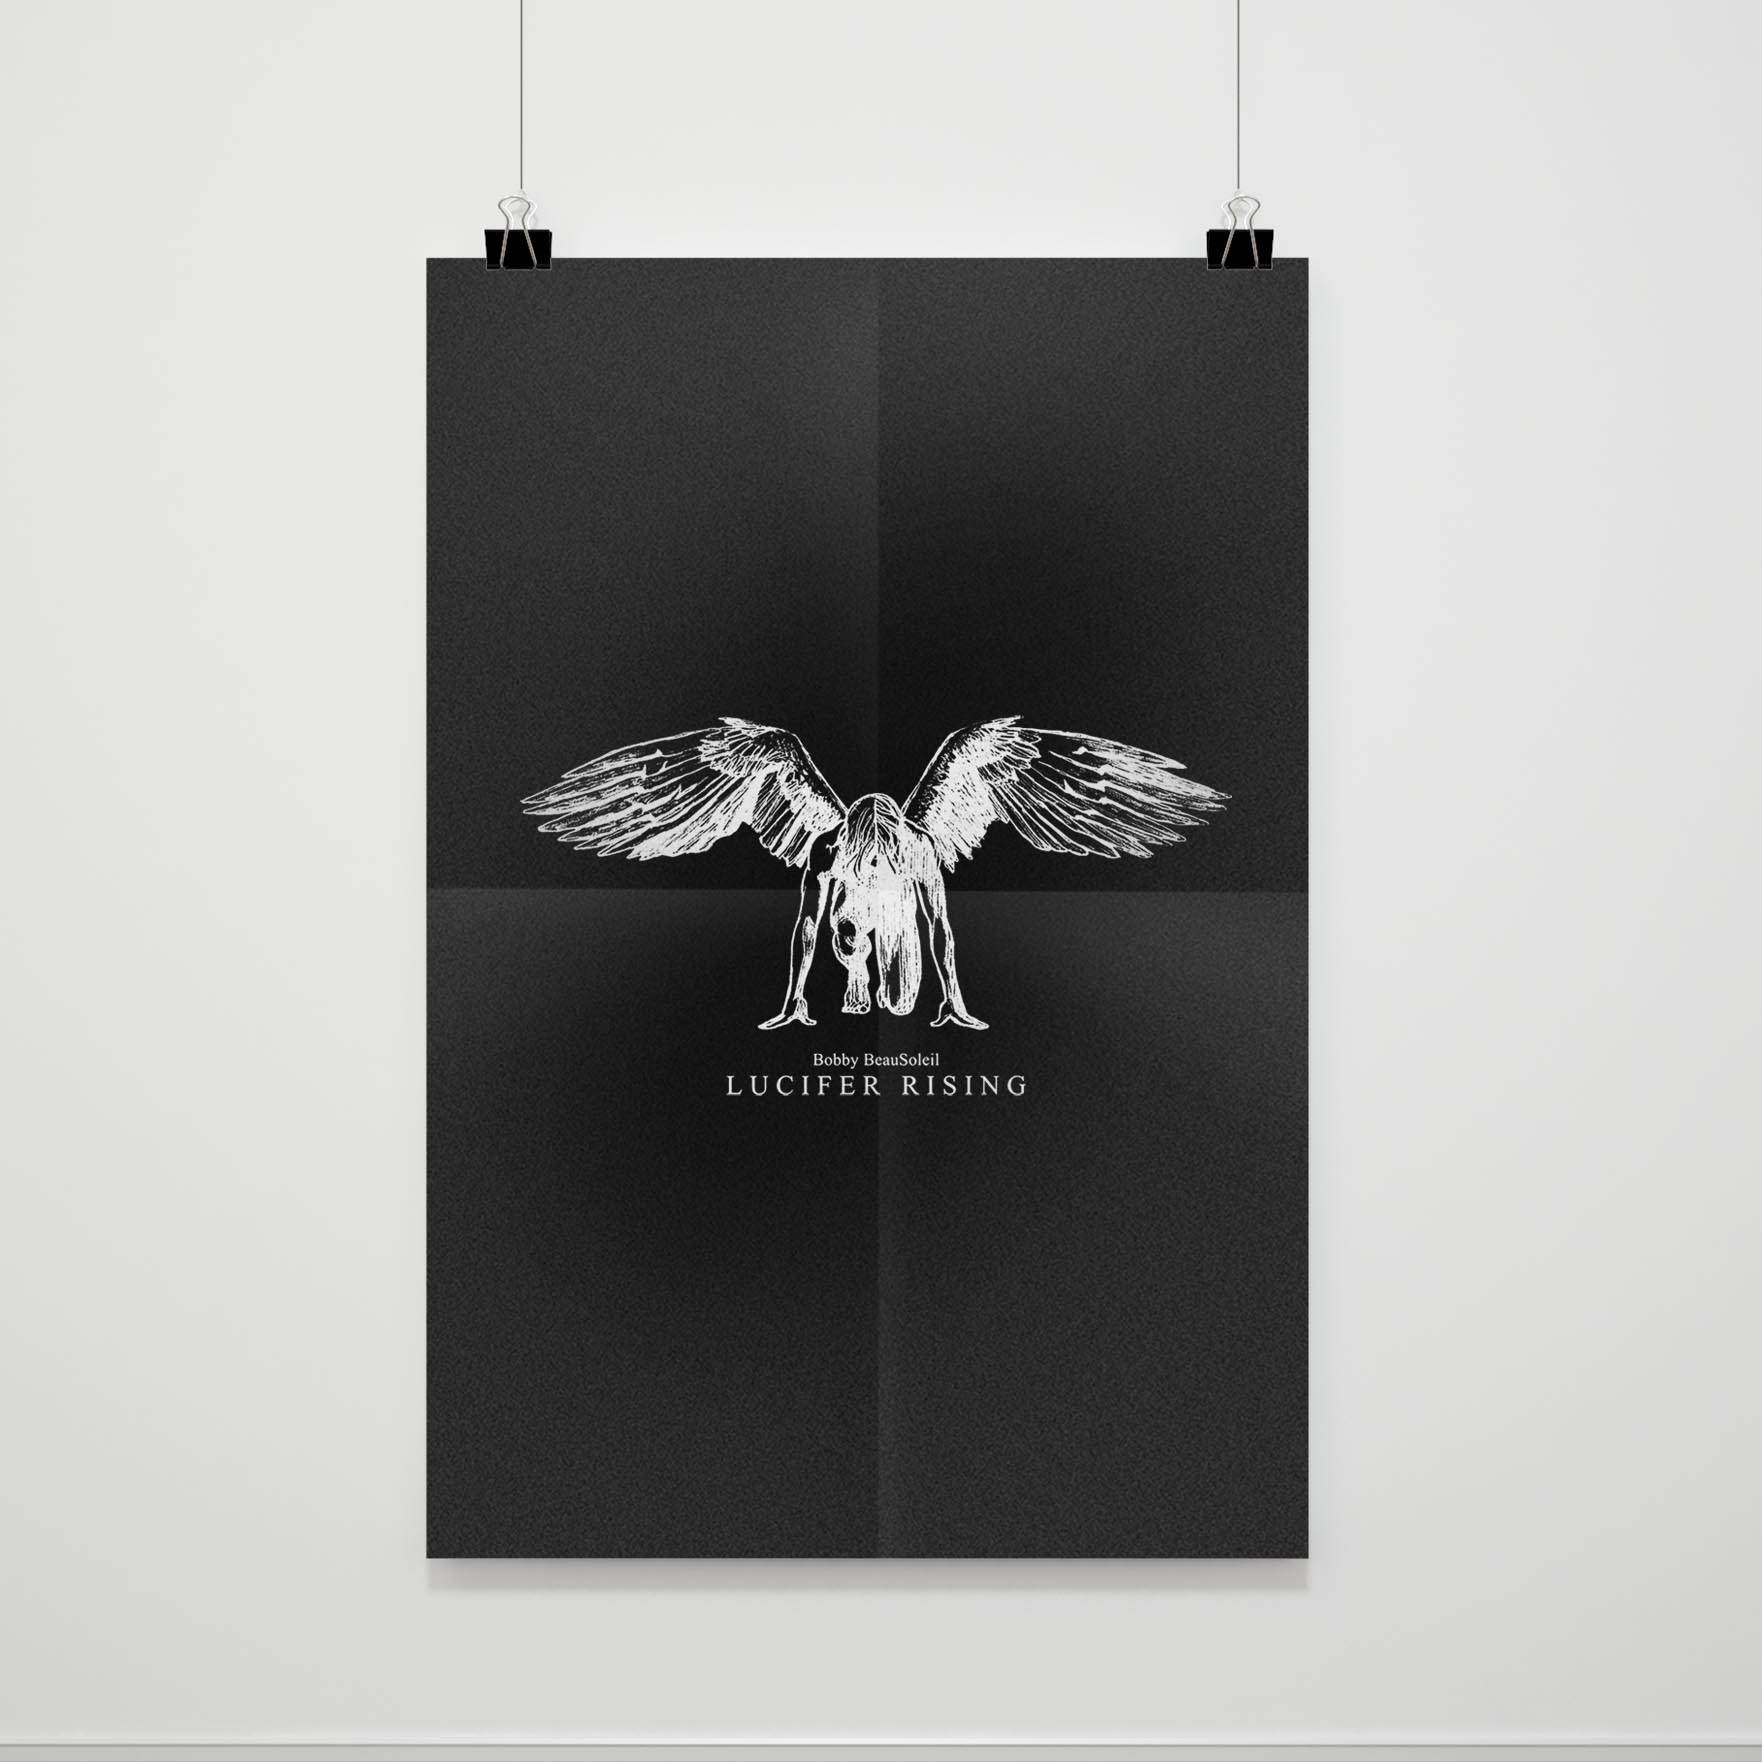 Lucifer Rising Bobby Beausoleil Poster - Poster Art Design